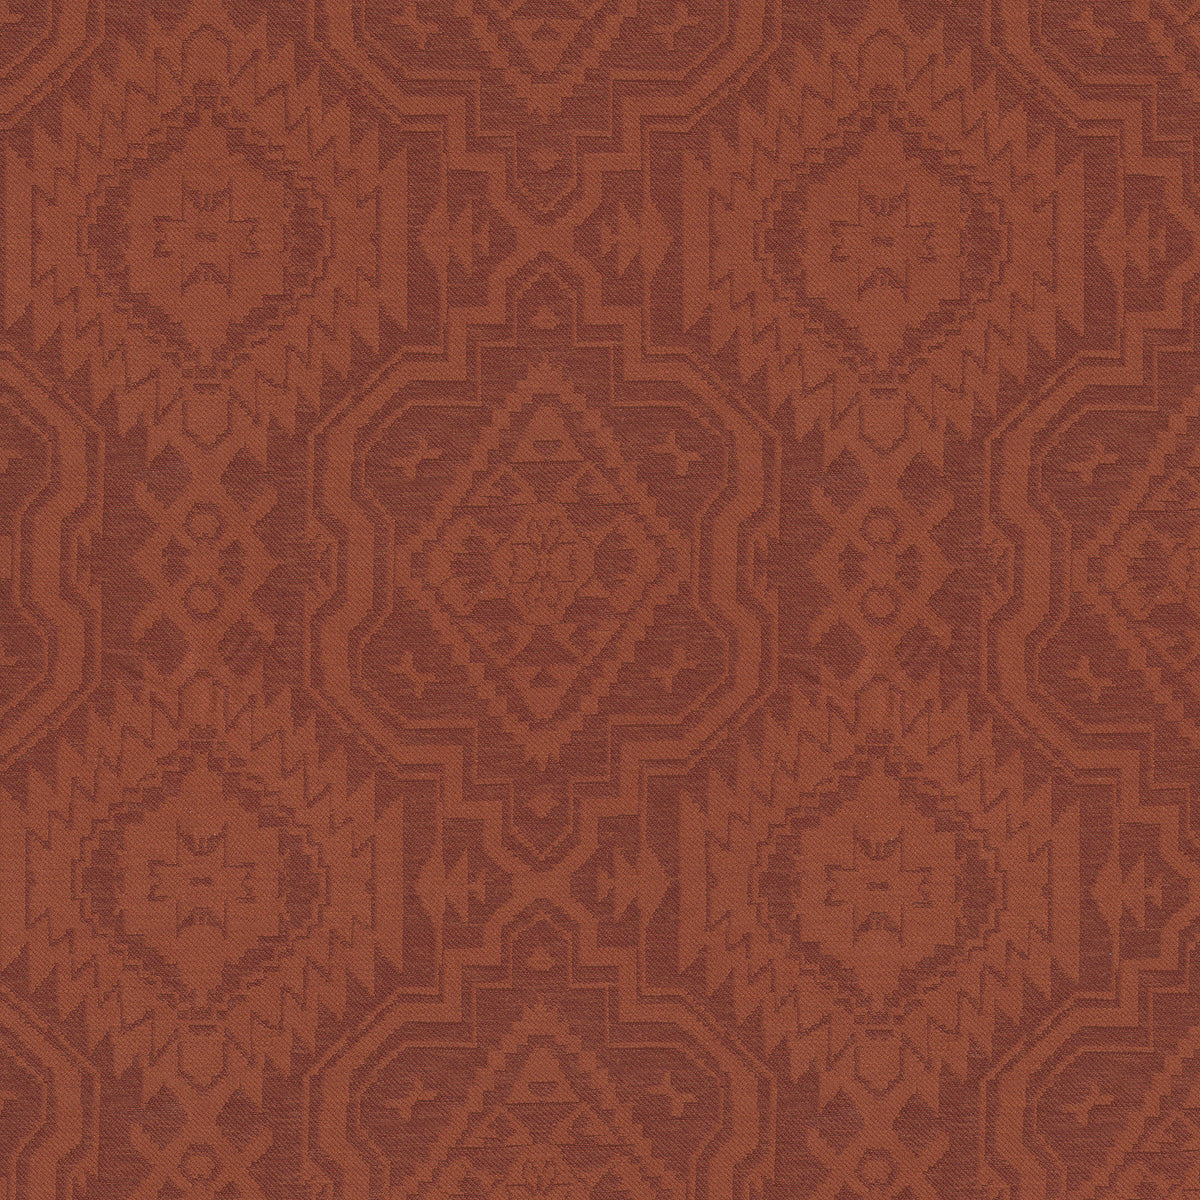 P/K Lifestyles Taos Blanket - Garnet 411652 Upholstery Fabric